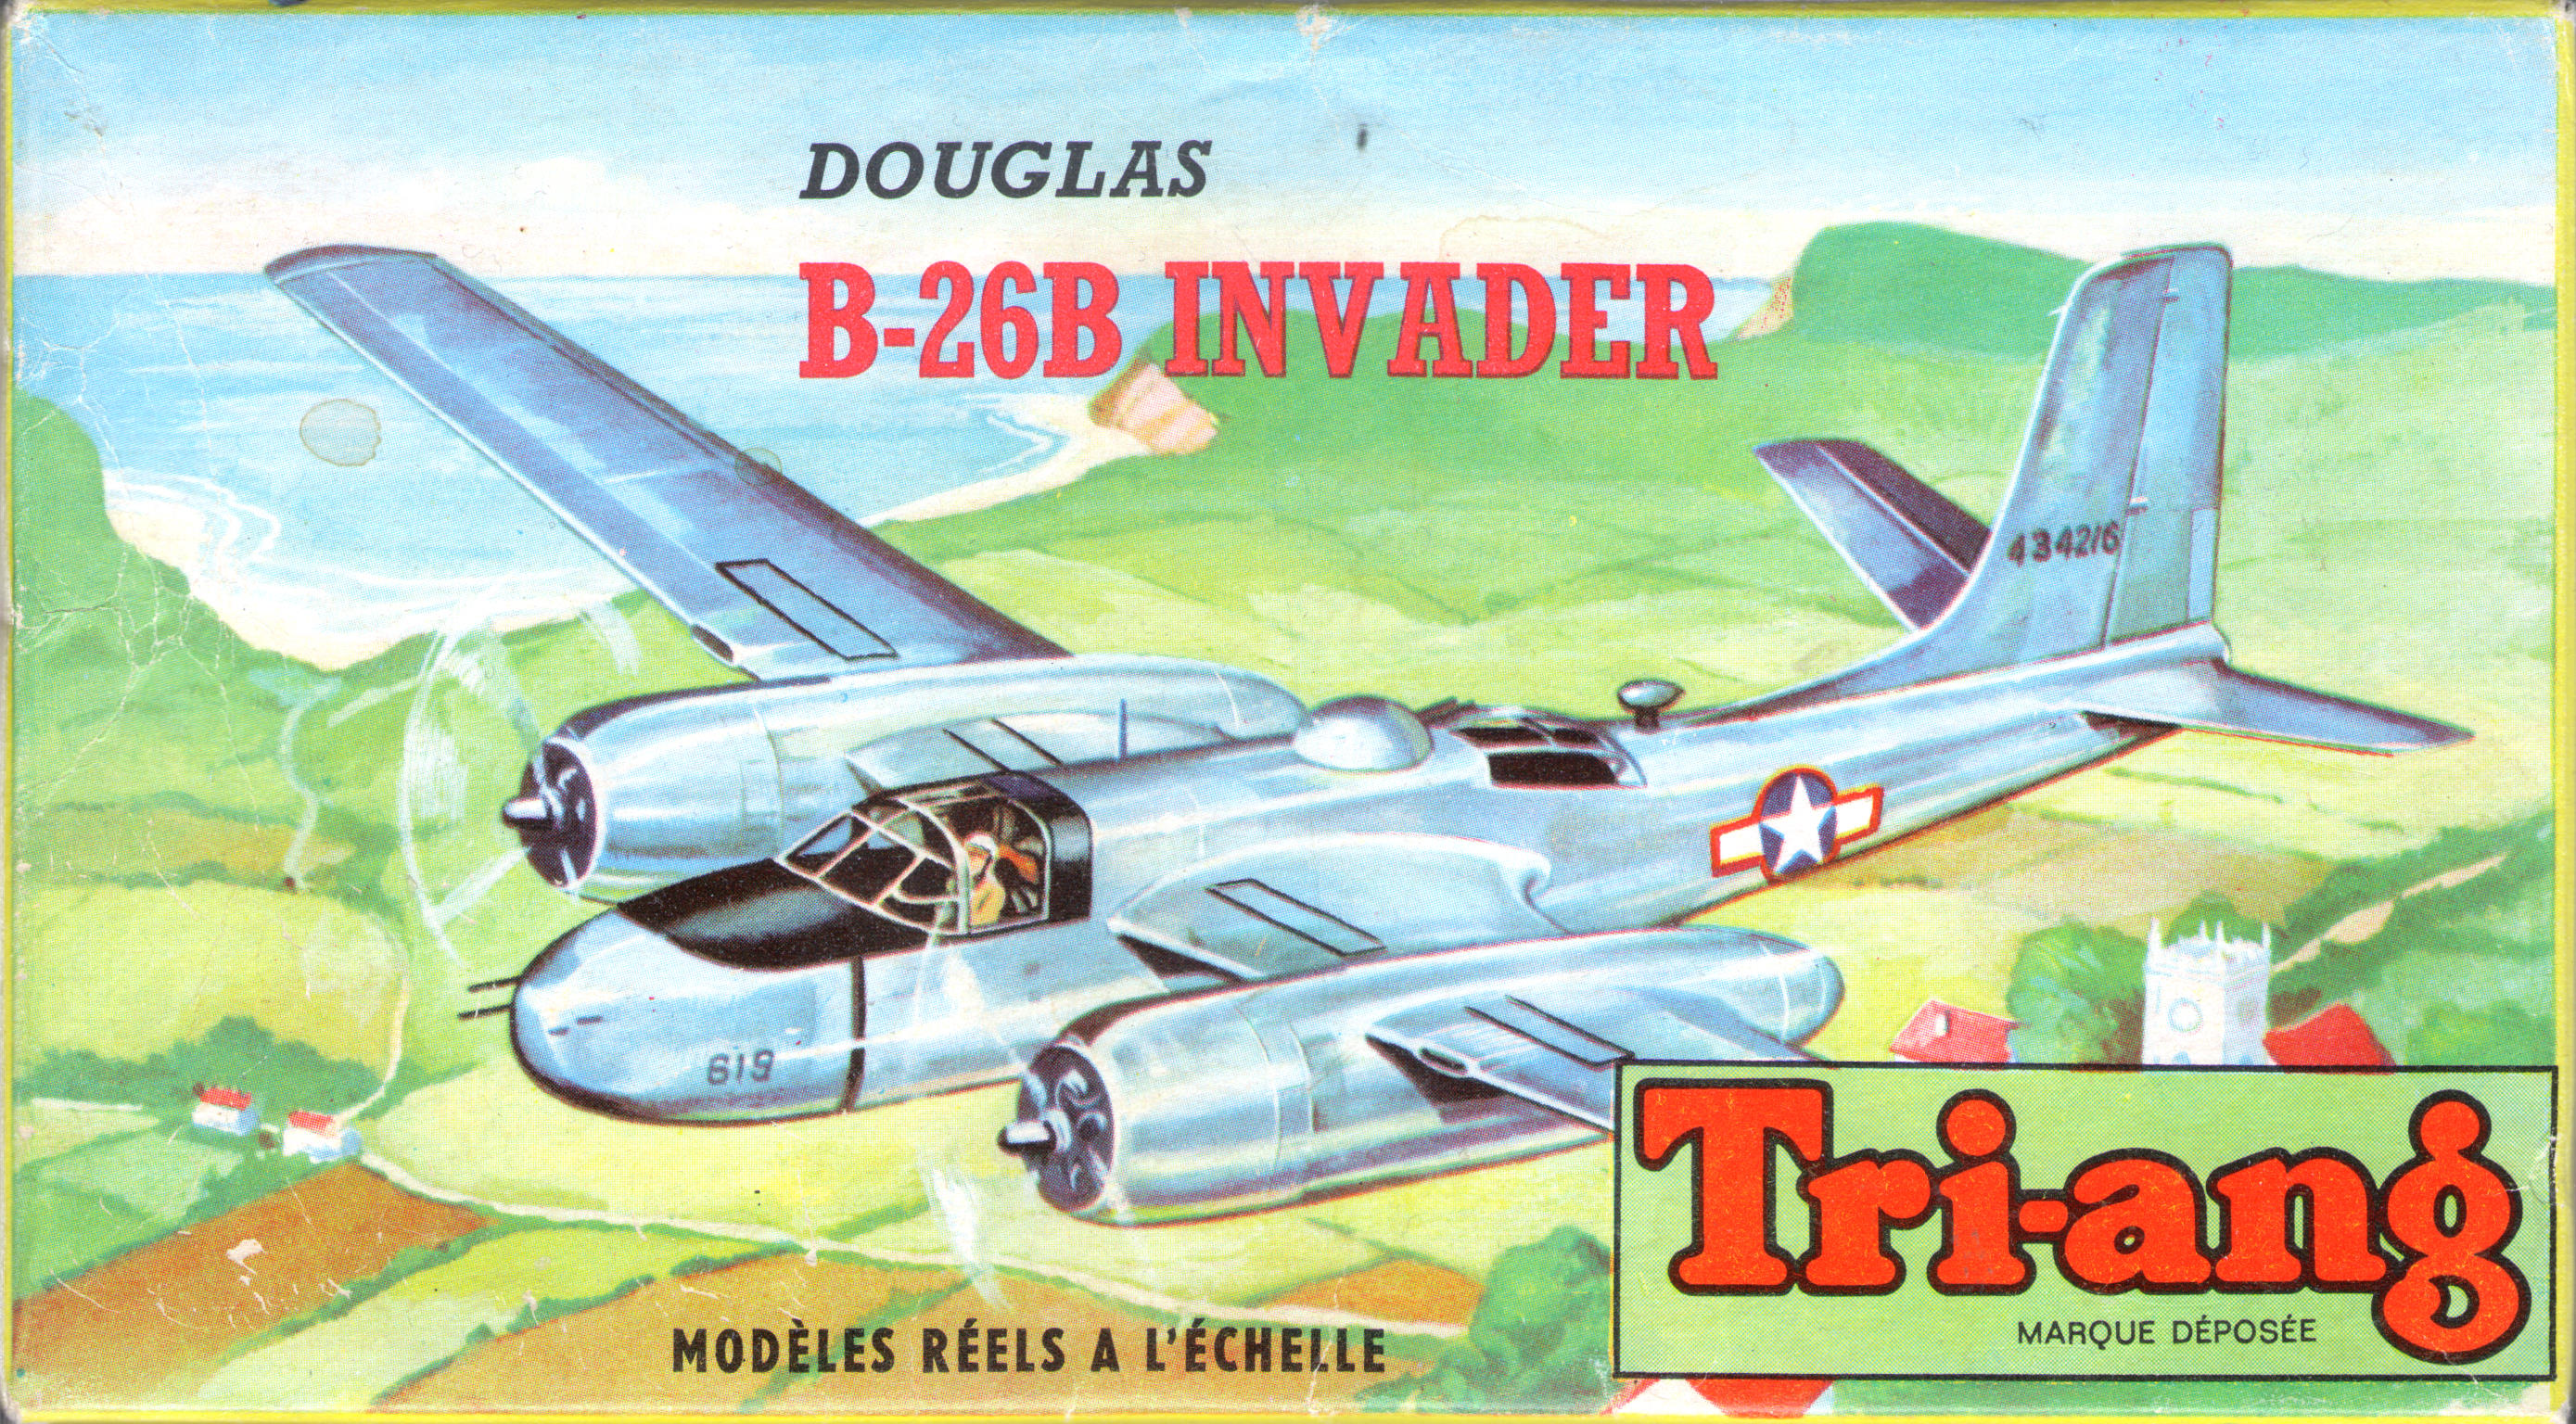 Tri-ang Ref.N C.385P Douglas B-26 Invader 1958, Lines Freres S.A. Calais, 1964, box